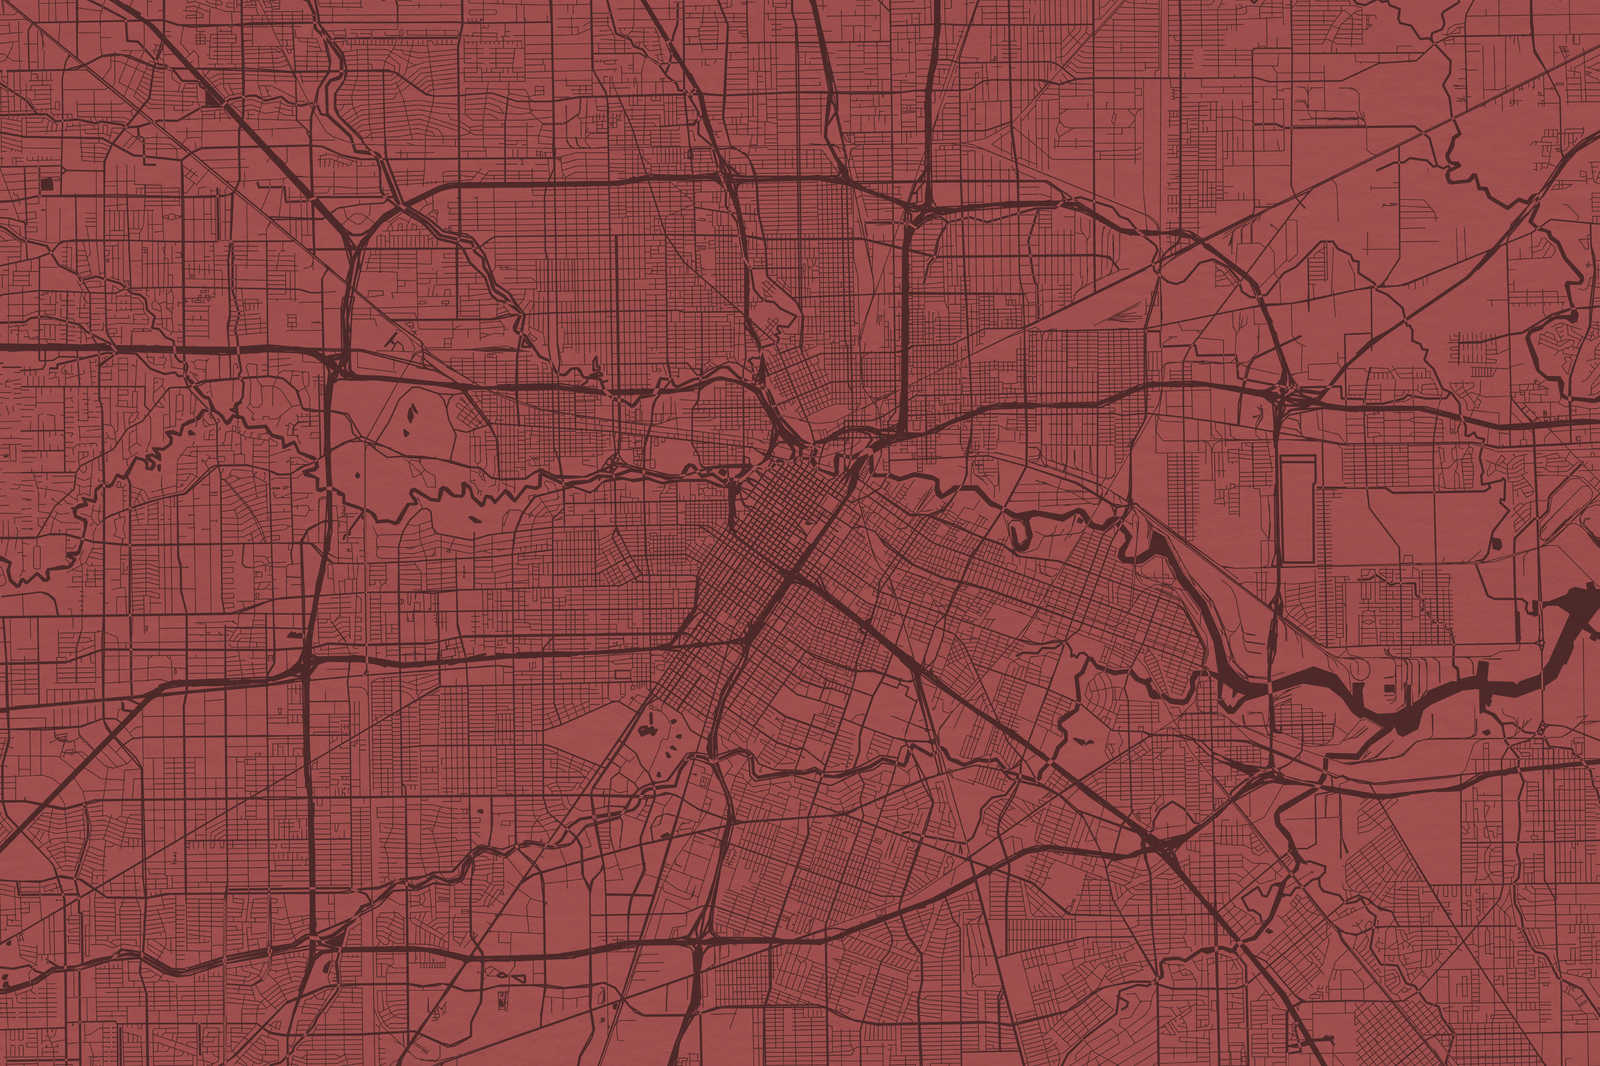             Leinwandbild Stadtkarte mit Straßenverlauf | rot – 0,90 m x 0,60 m
        